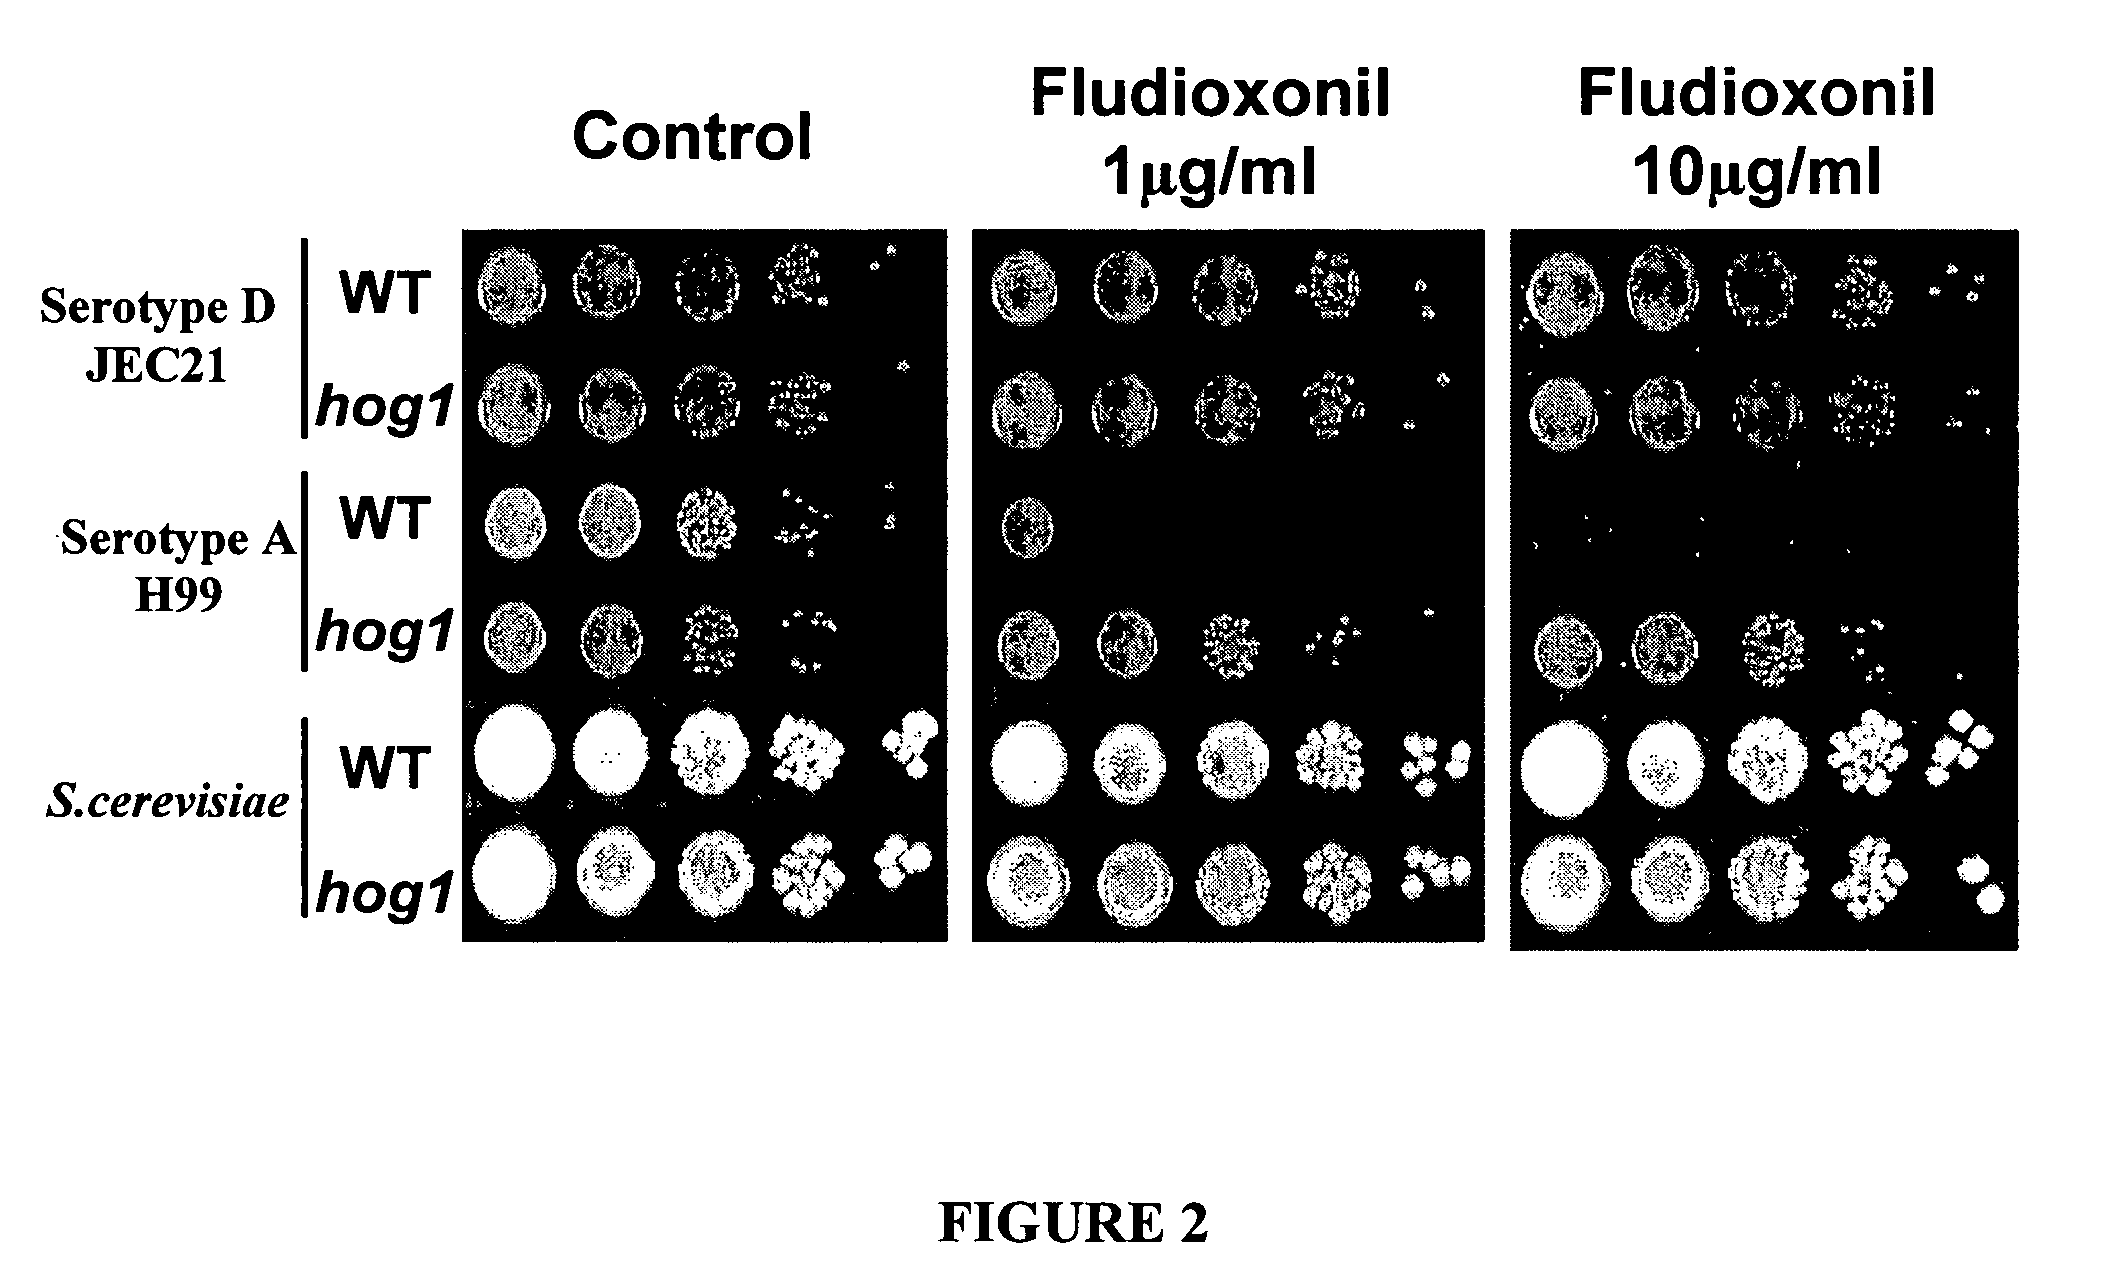 Fungicidal effect by regulating signal transduction pathways